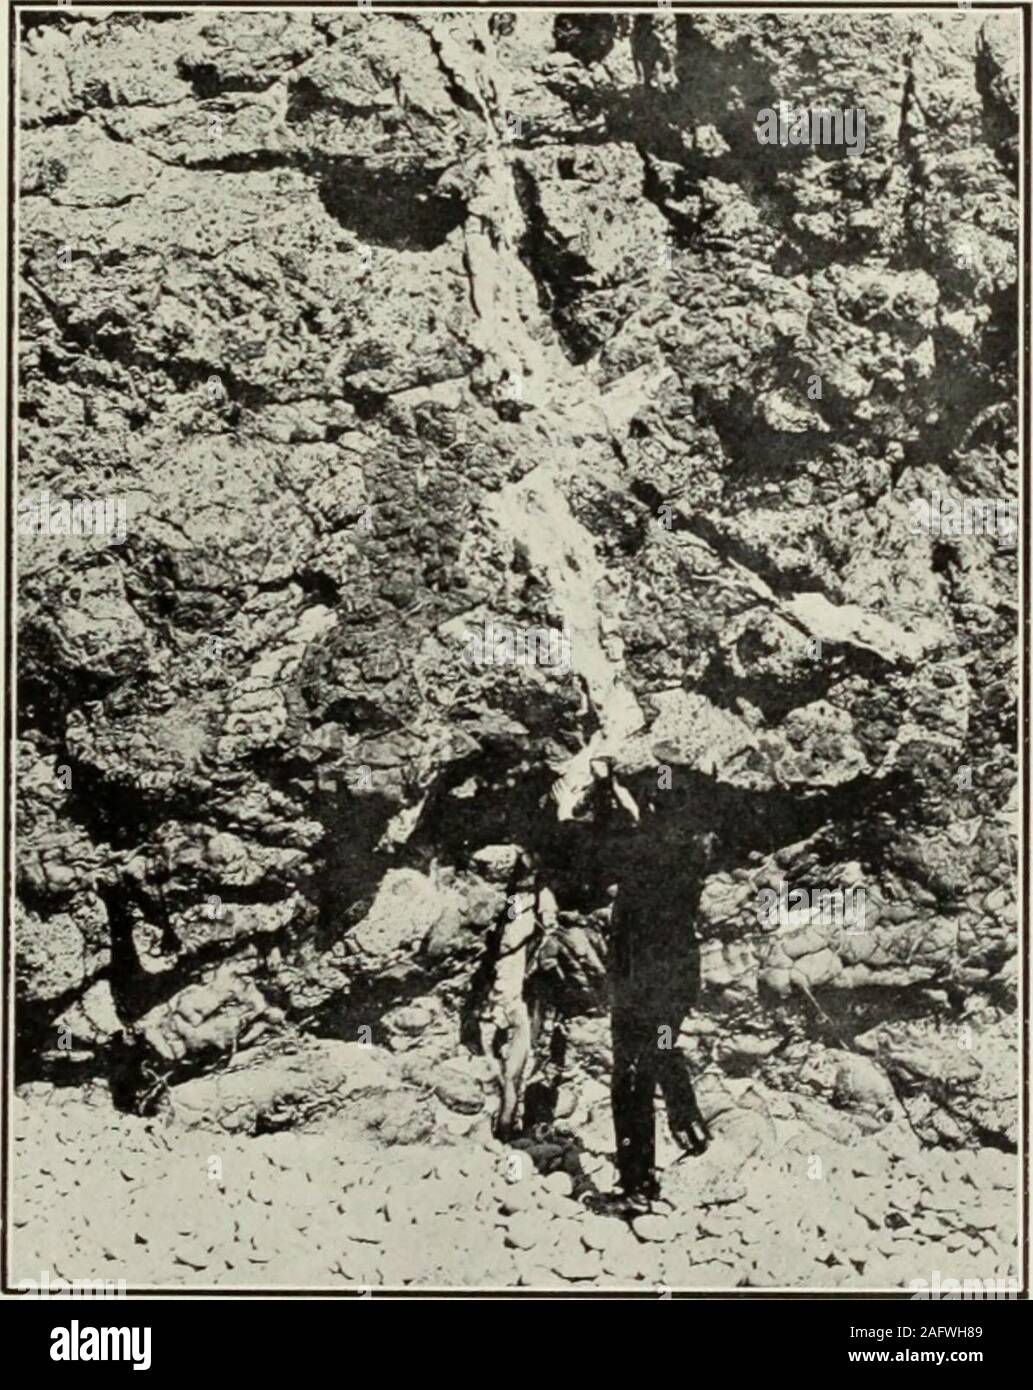 . The geology of the Oamaru district, North Otago (Eastern Otago division). James Park, plmtn.]A. FOSSILIFKKOCS LiMESTOXK VkIX IX r.Cini.rriC J{ni;CCIA, SKAU HltKAKWATKH, Oamaiu.. A. C. Giffori/, /i/mto.] B. FOSSILIFKHOLS LiMESTONE Veix IX TaCHYLITIC Breccia, near Breakwatkr, Oamaru. Geol. Bull. No. 20. [7o face p(ige 76. Page Page 77 Glauconitic Sandst one—ro /(/ / n iied. 77 Upper Tari;et Gully Sections 82 78 Section on East Side of Target (iully 82 78 Section across Target (Jully above 79 Town Belt 82 79 Section South of Duntroon.. 83 80 Section at Otiake 83 81 Section on Left Bank of Wai Stock Photo